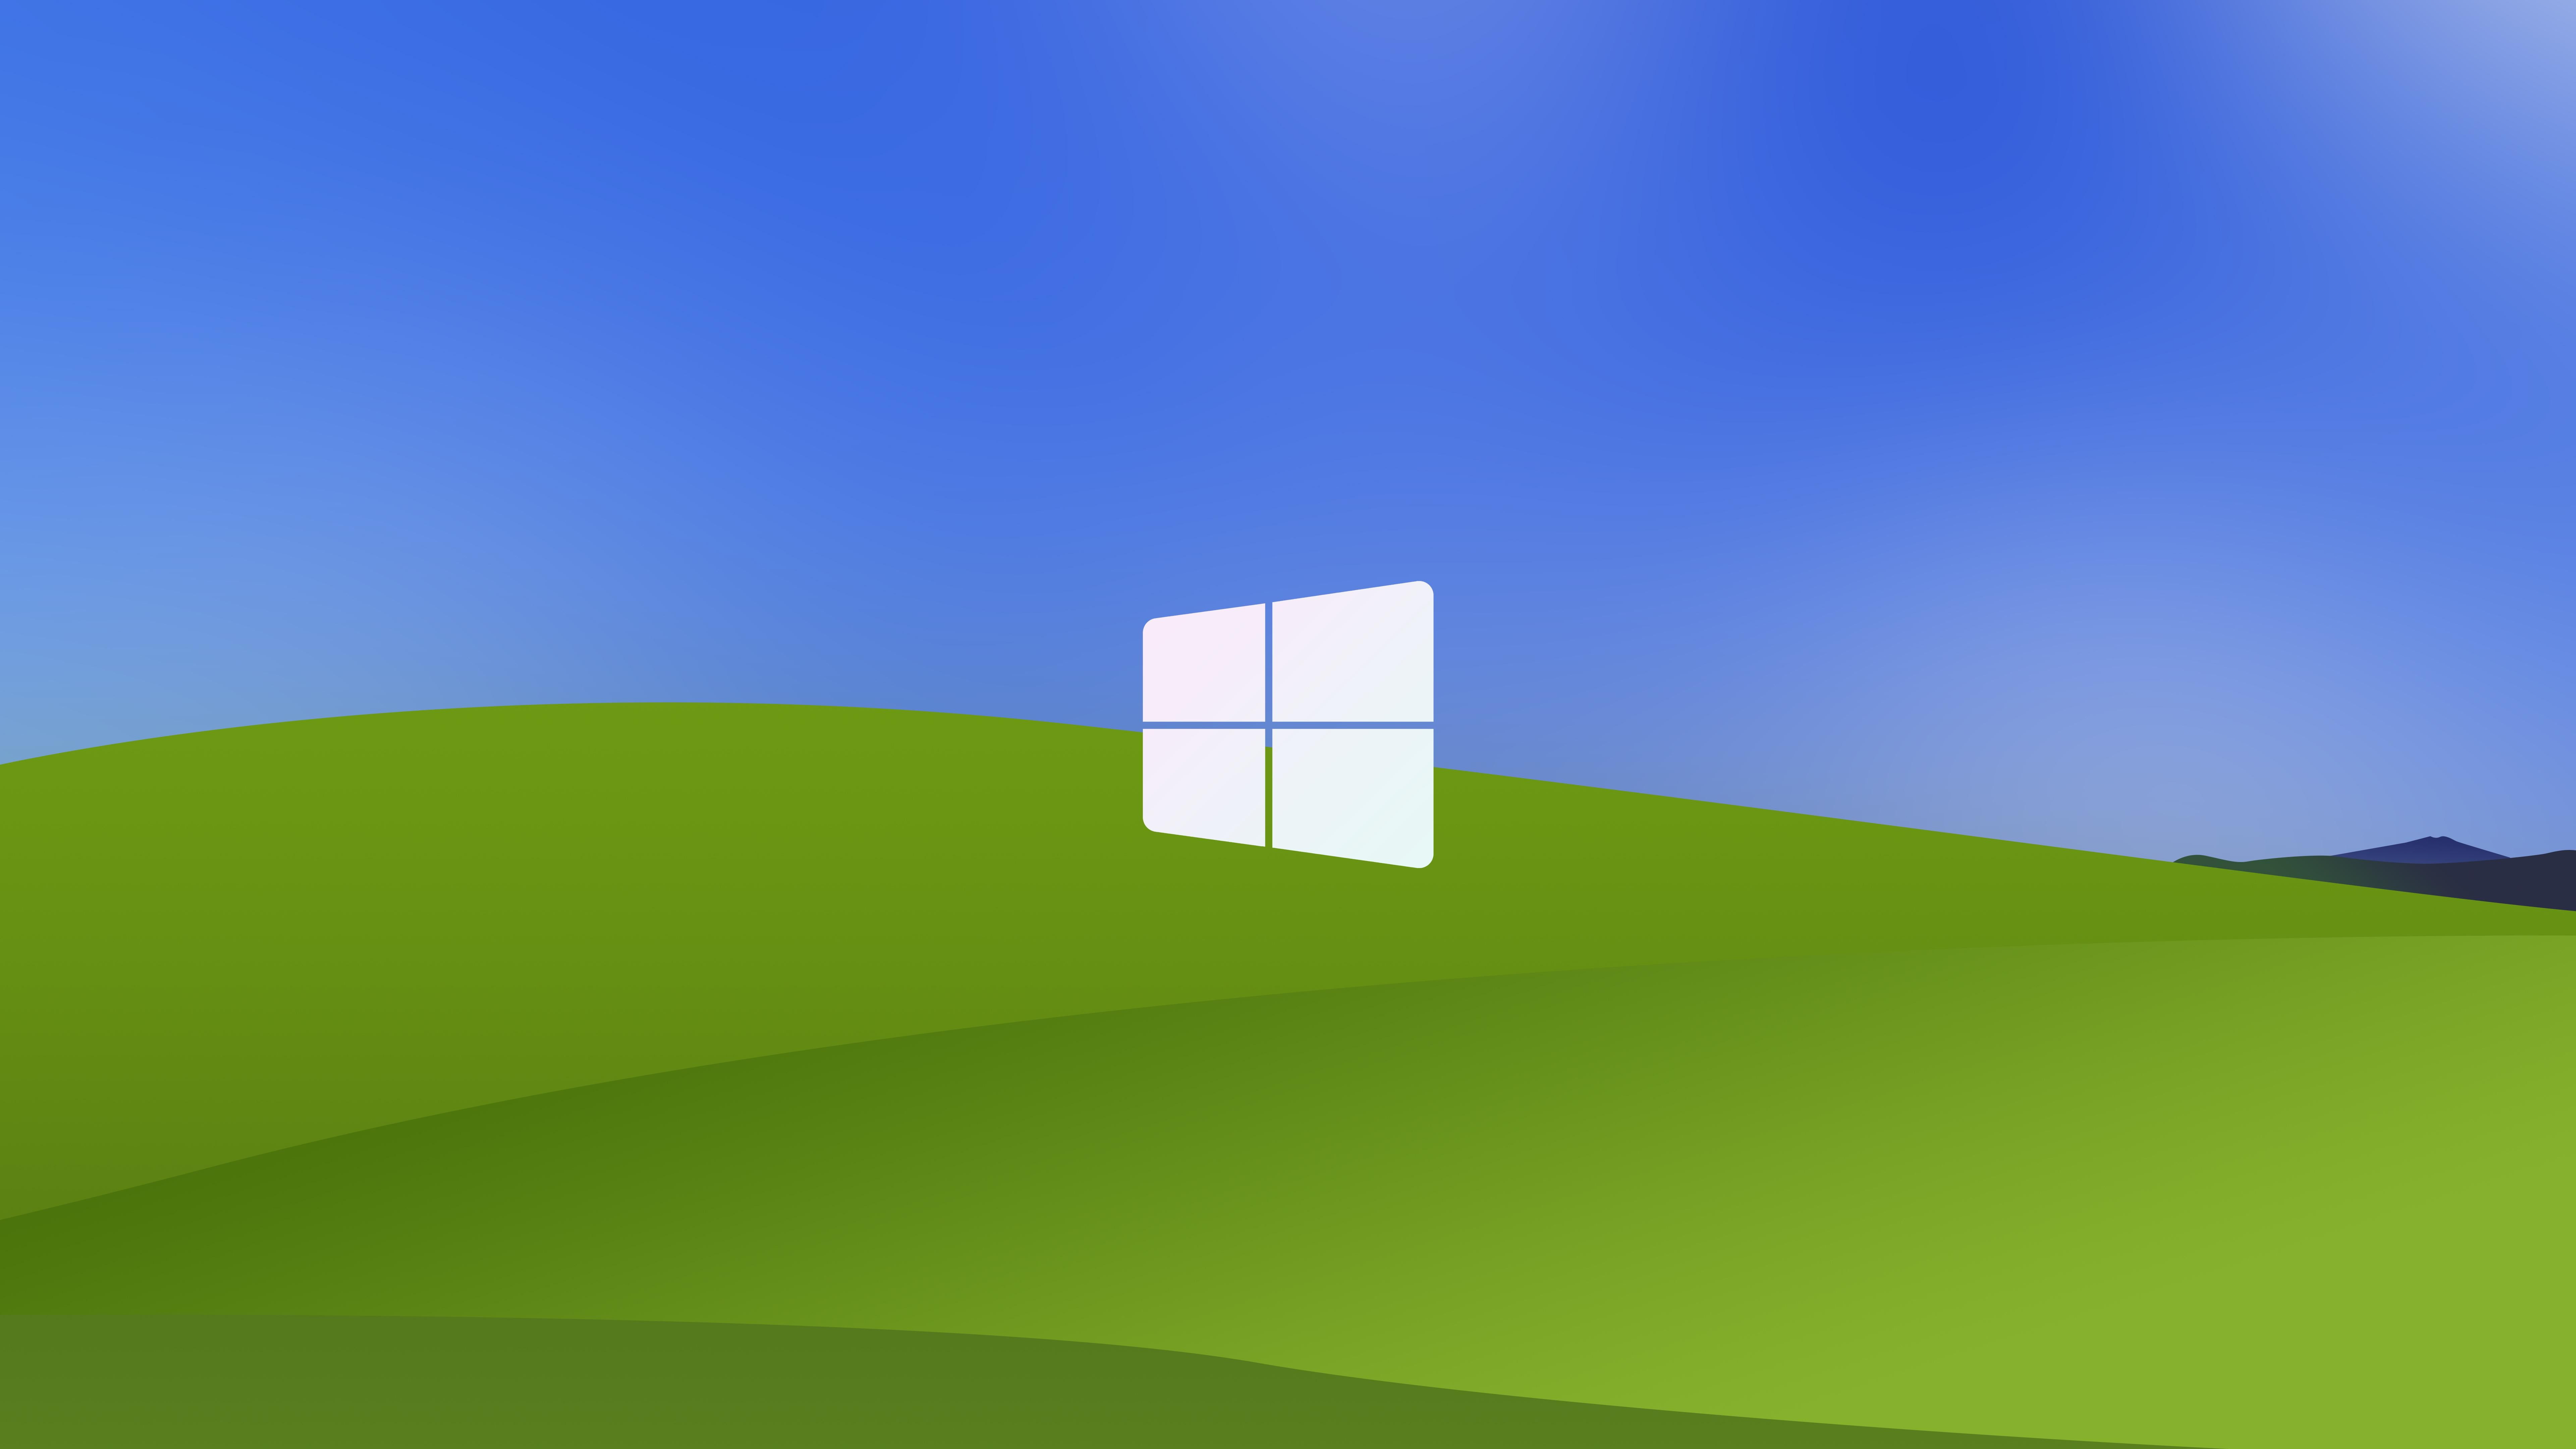 Windows XP, Microsoft